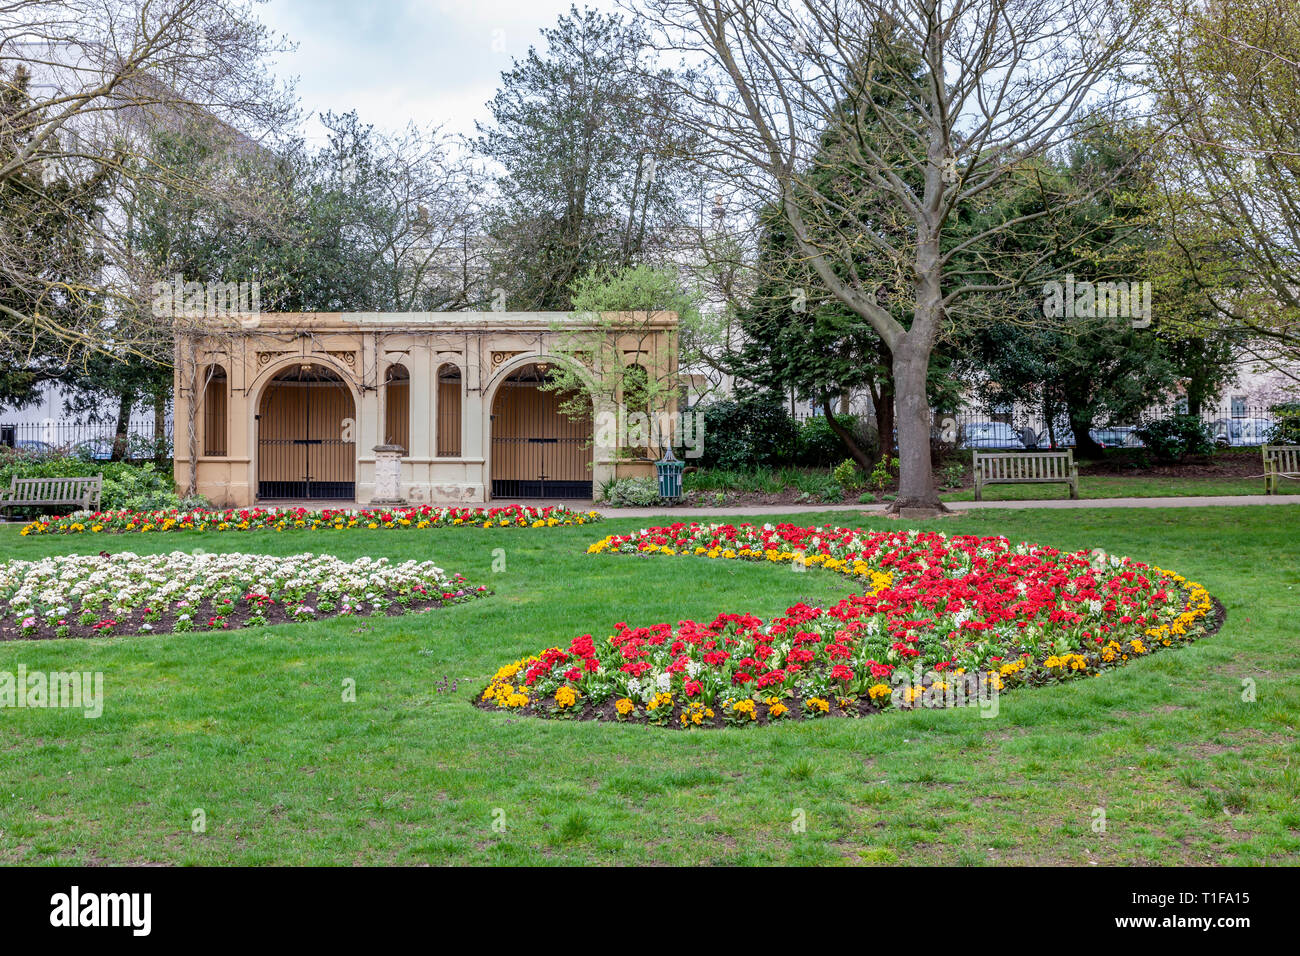 Jephson gardens, Leamington Spa, Warwickshire, West Midlands, UK. Stock Photo